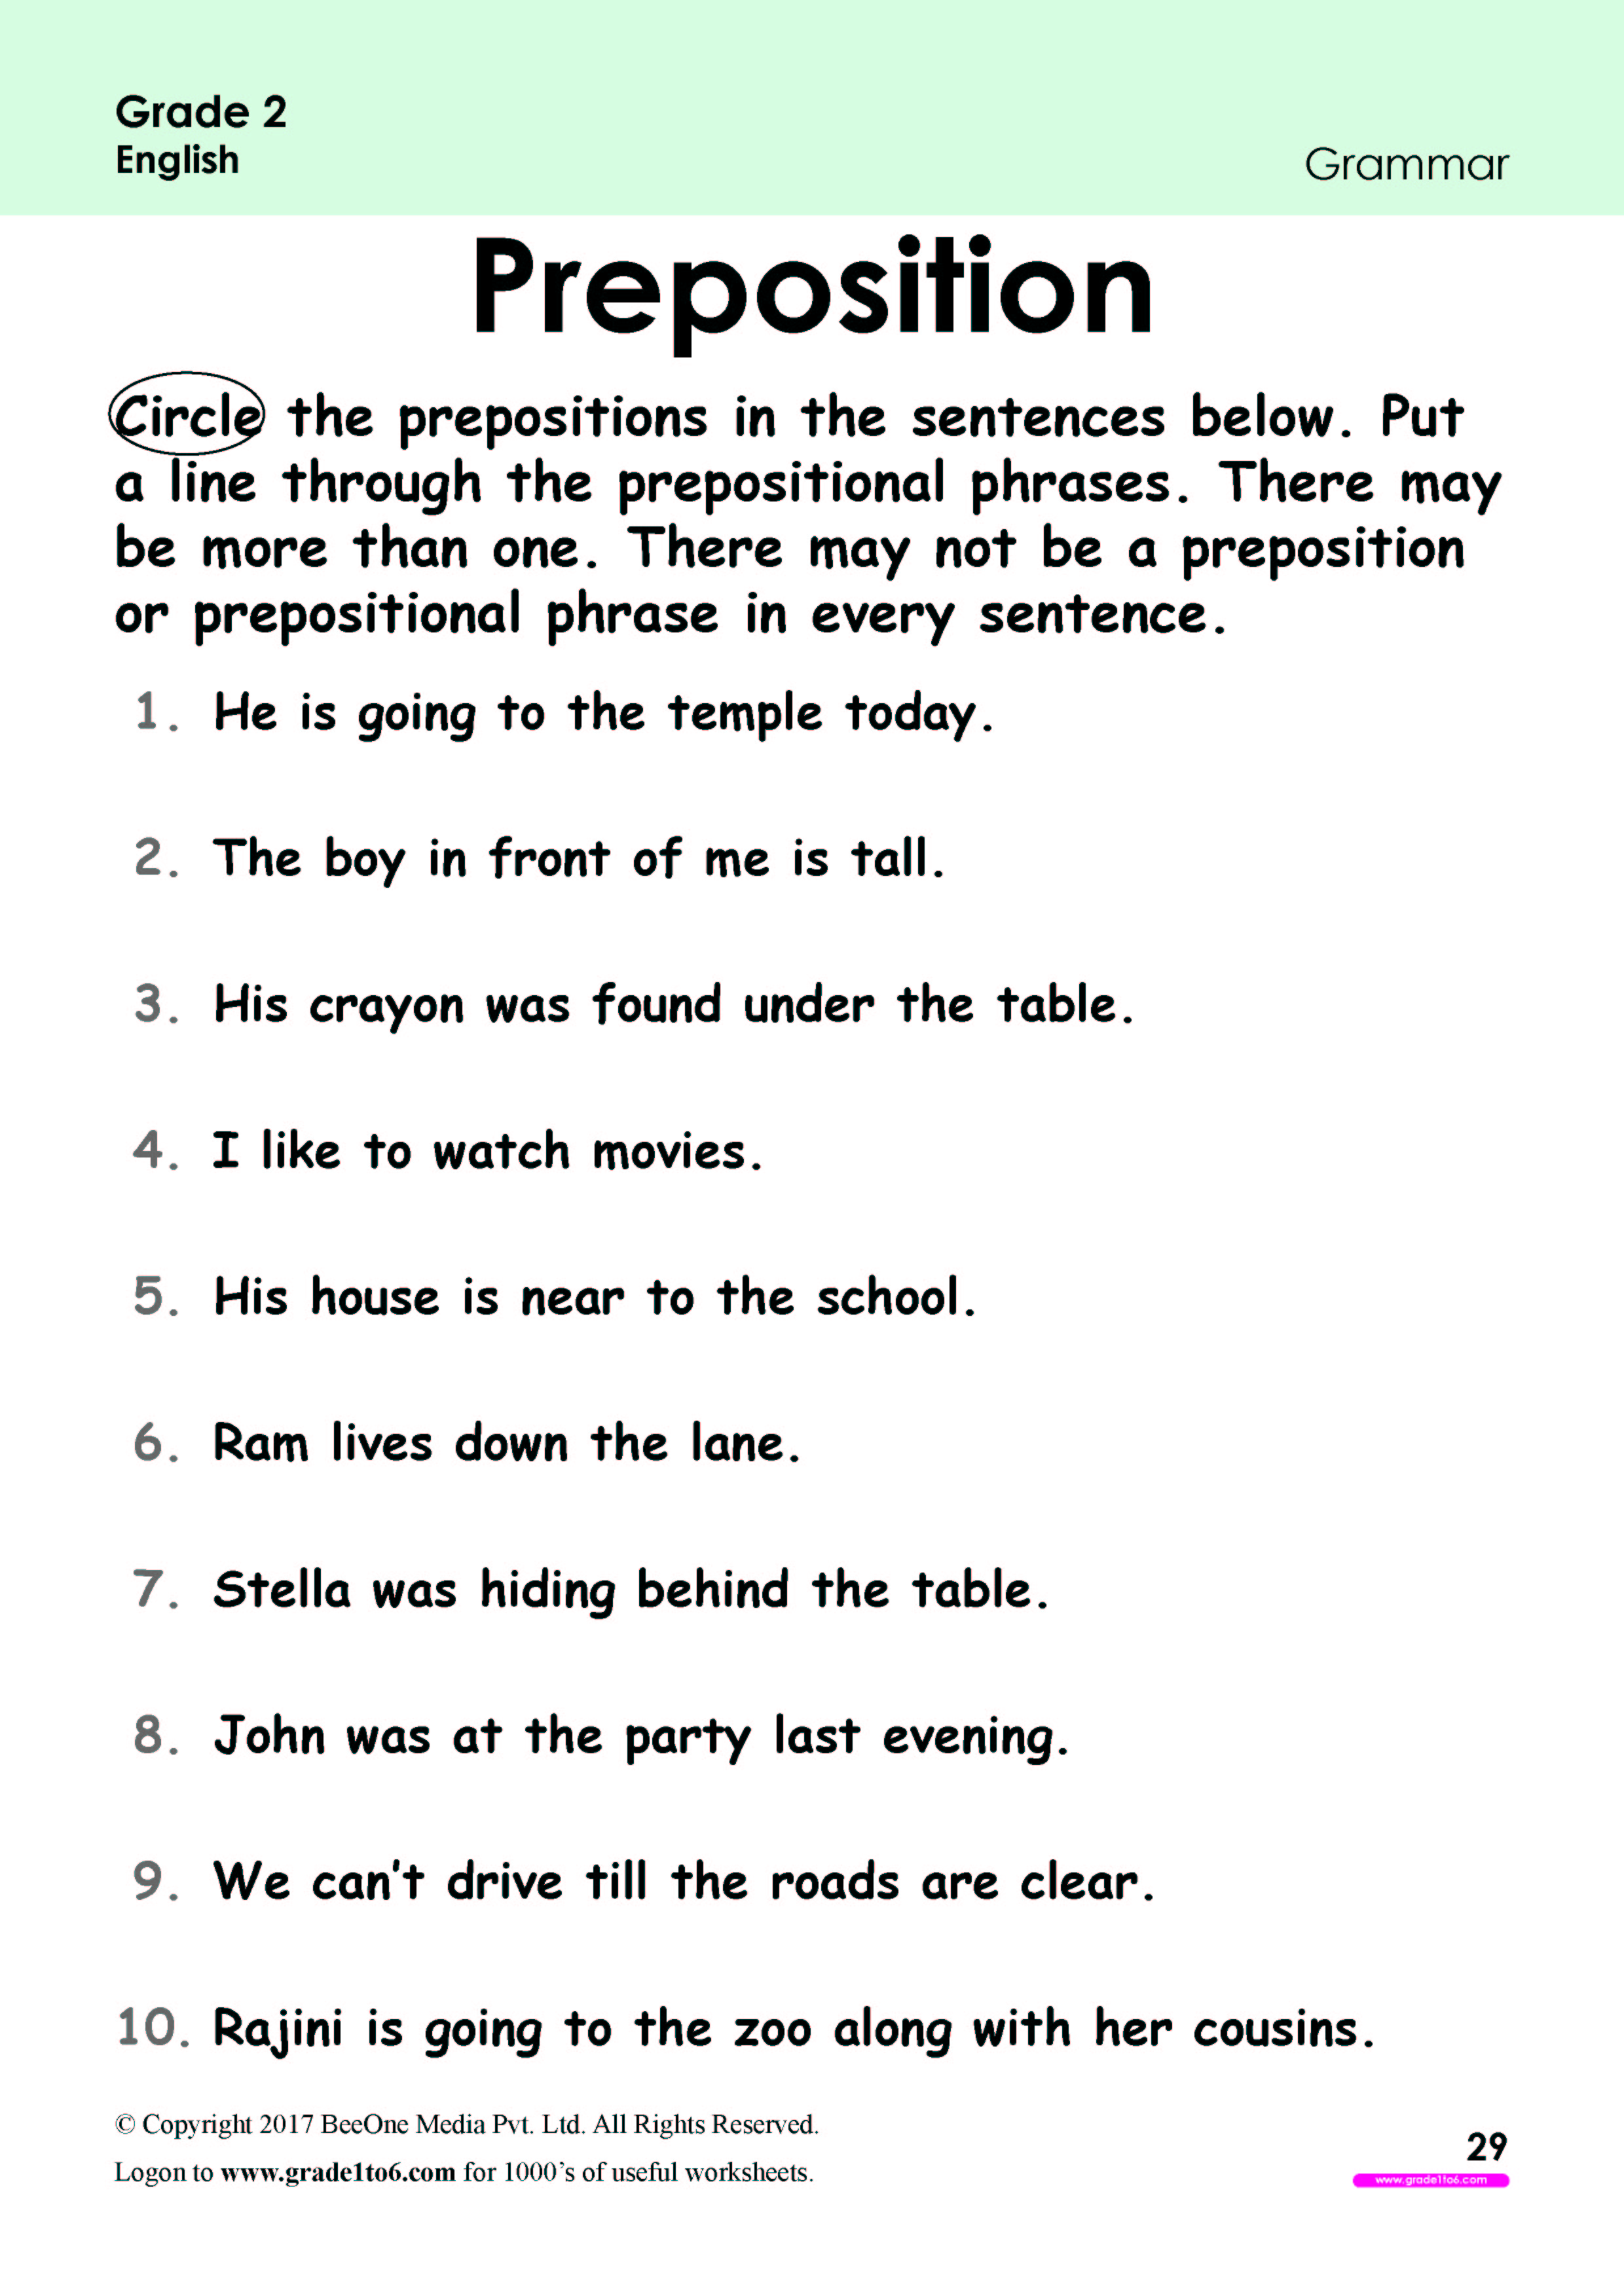 prepositions-exercises-for-class-10-icse-with-answers-pdf-matrixzero